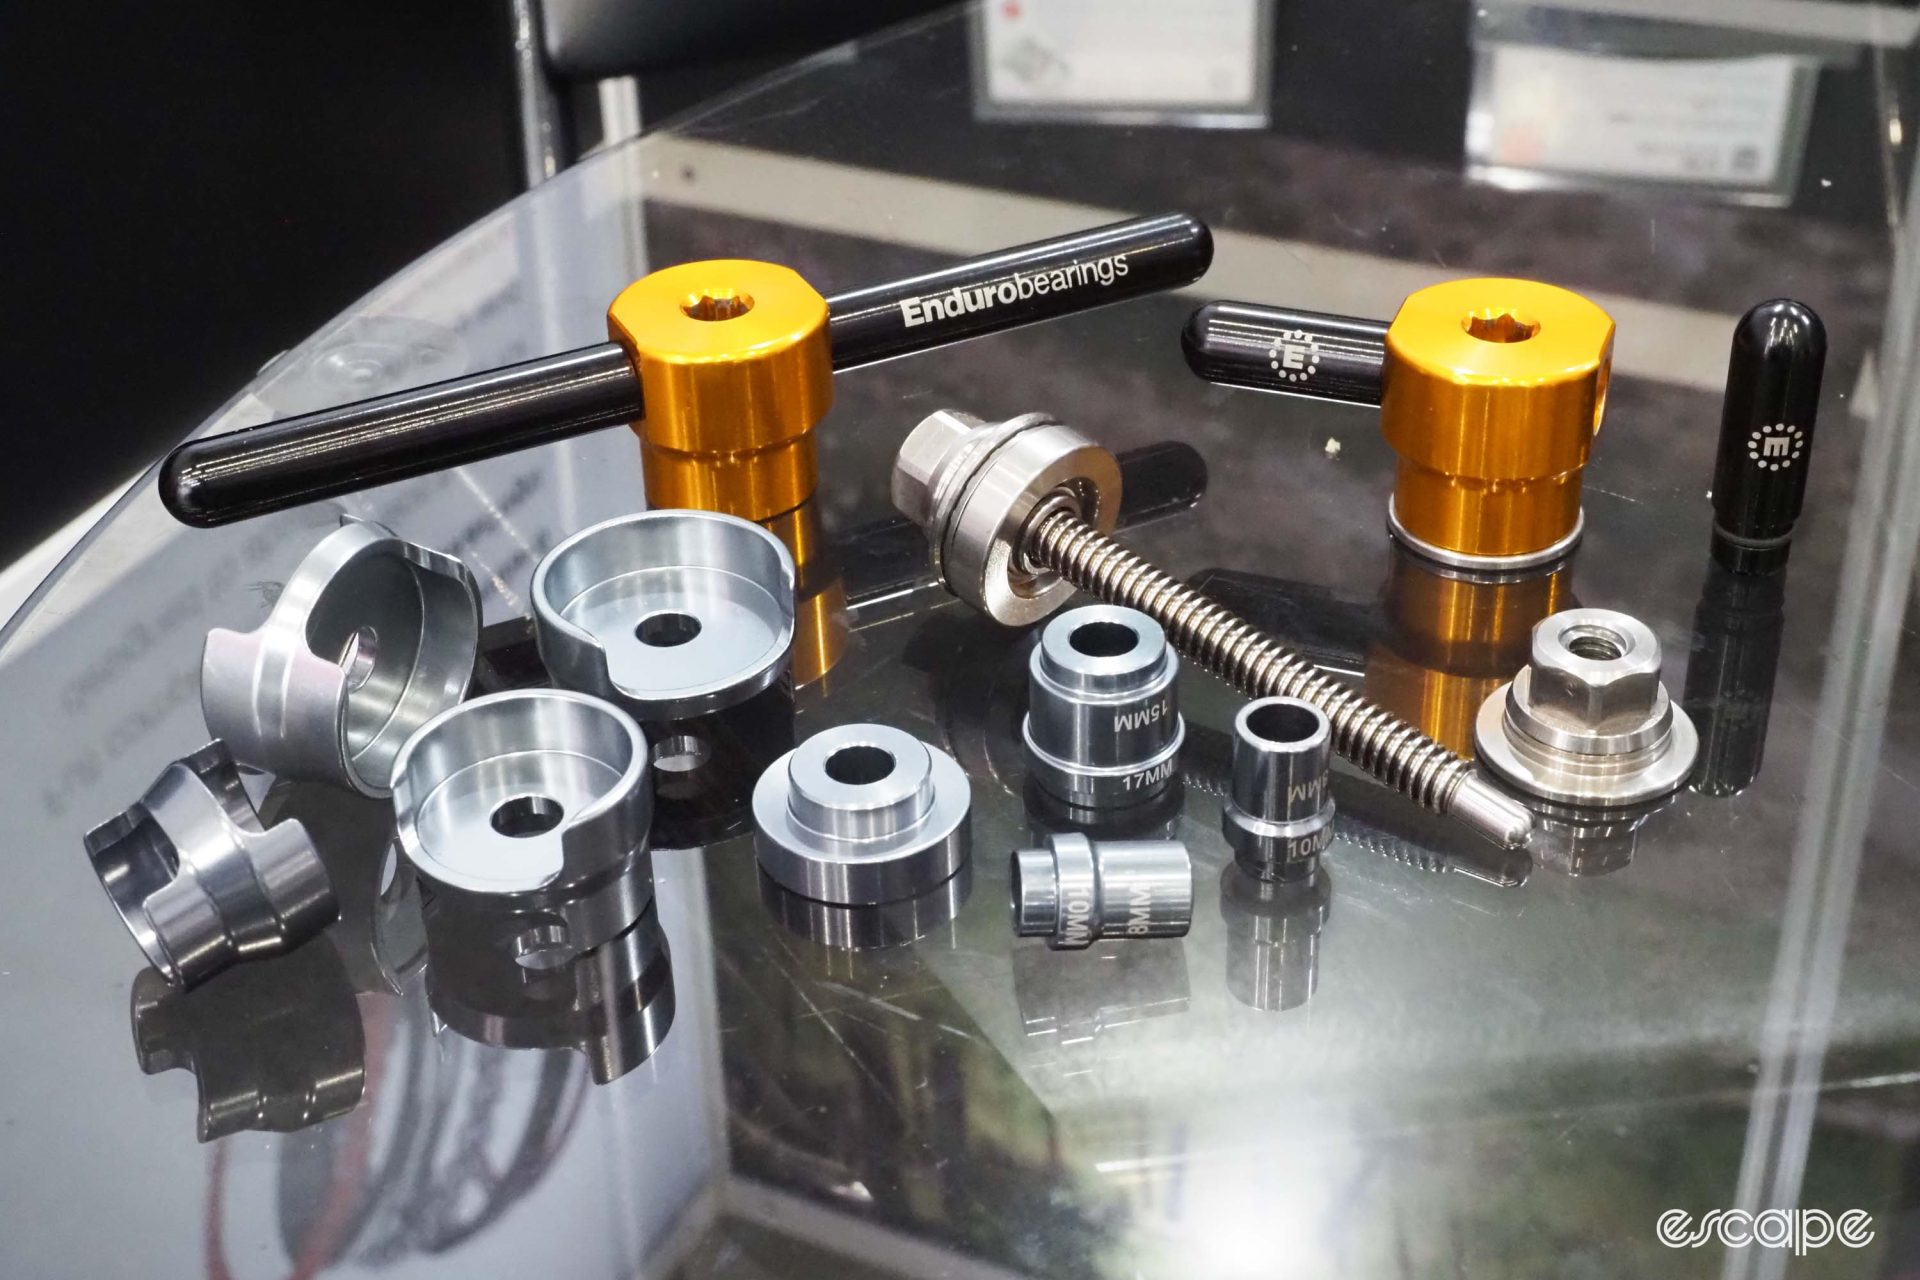 Enduro bearing press and removal tool kit